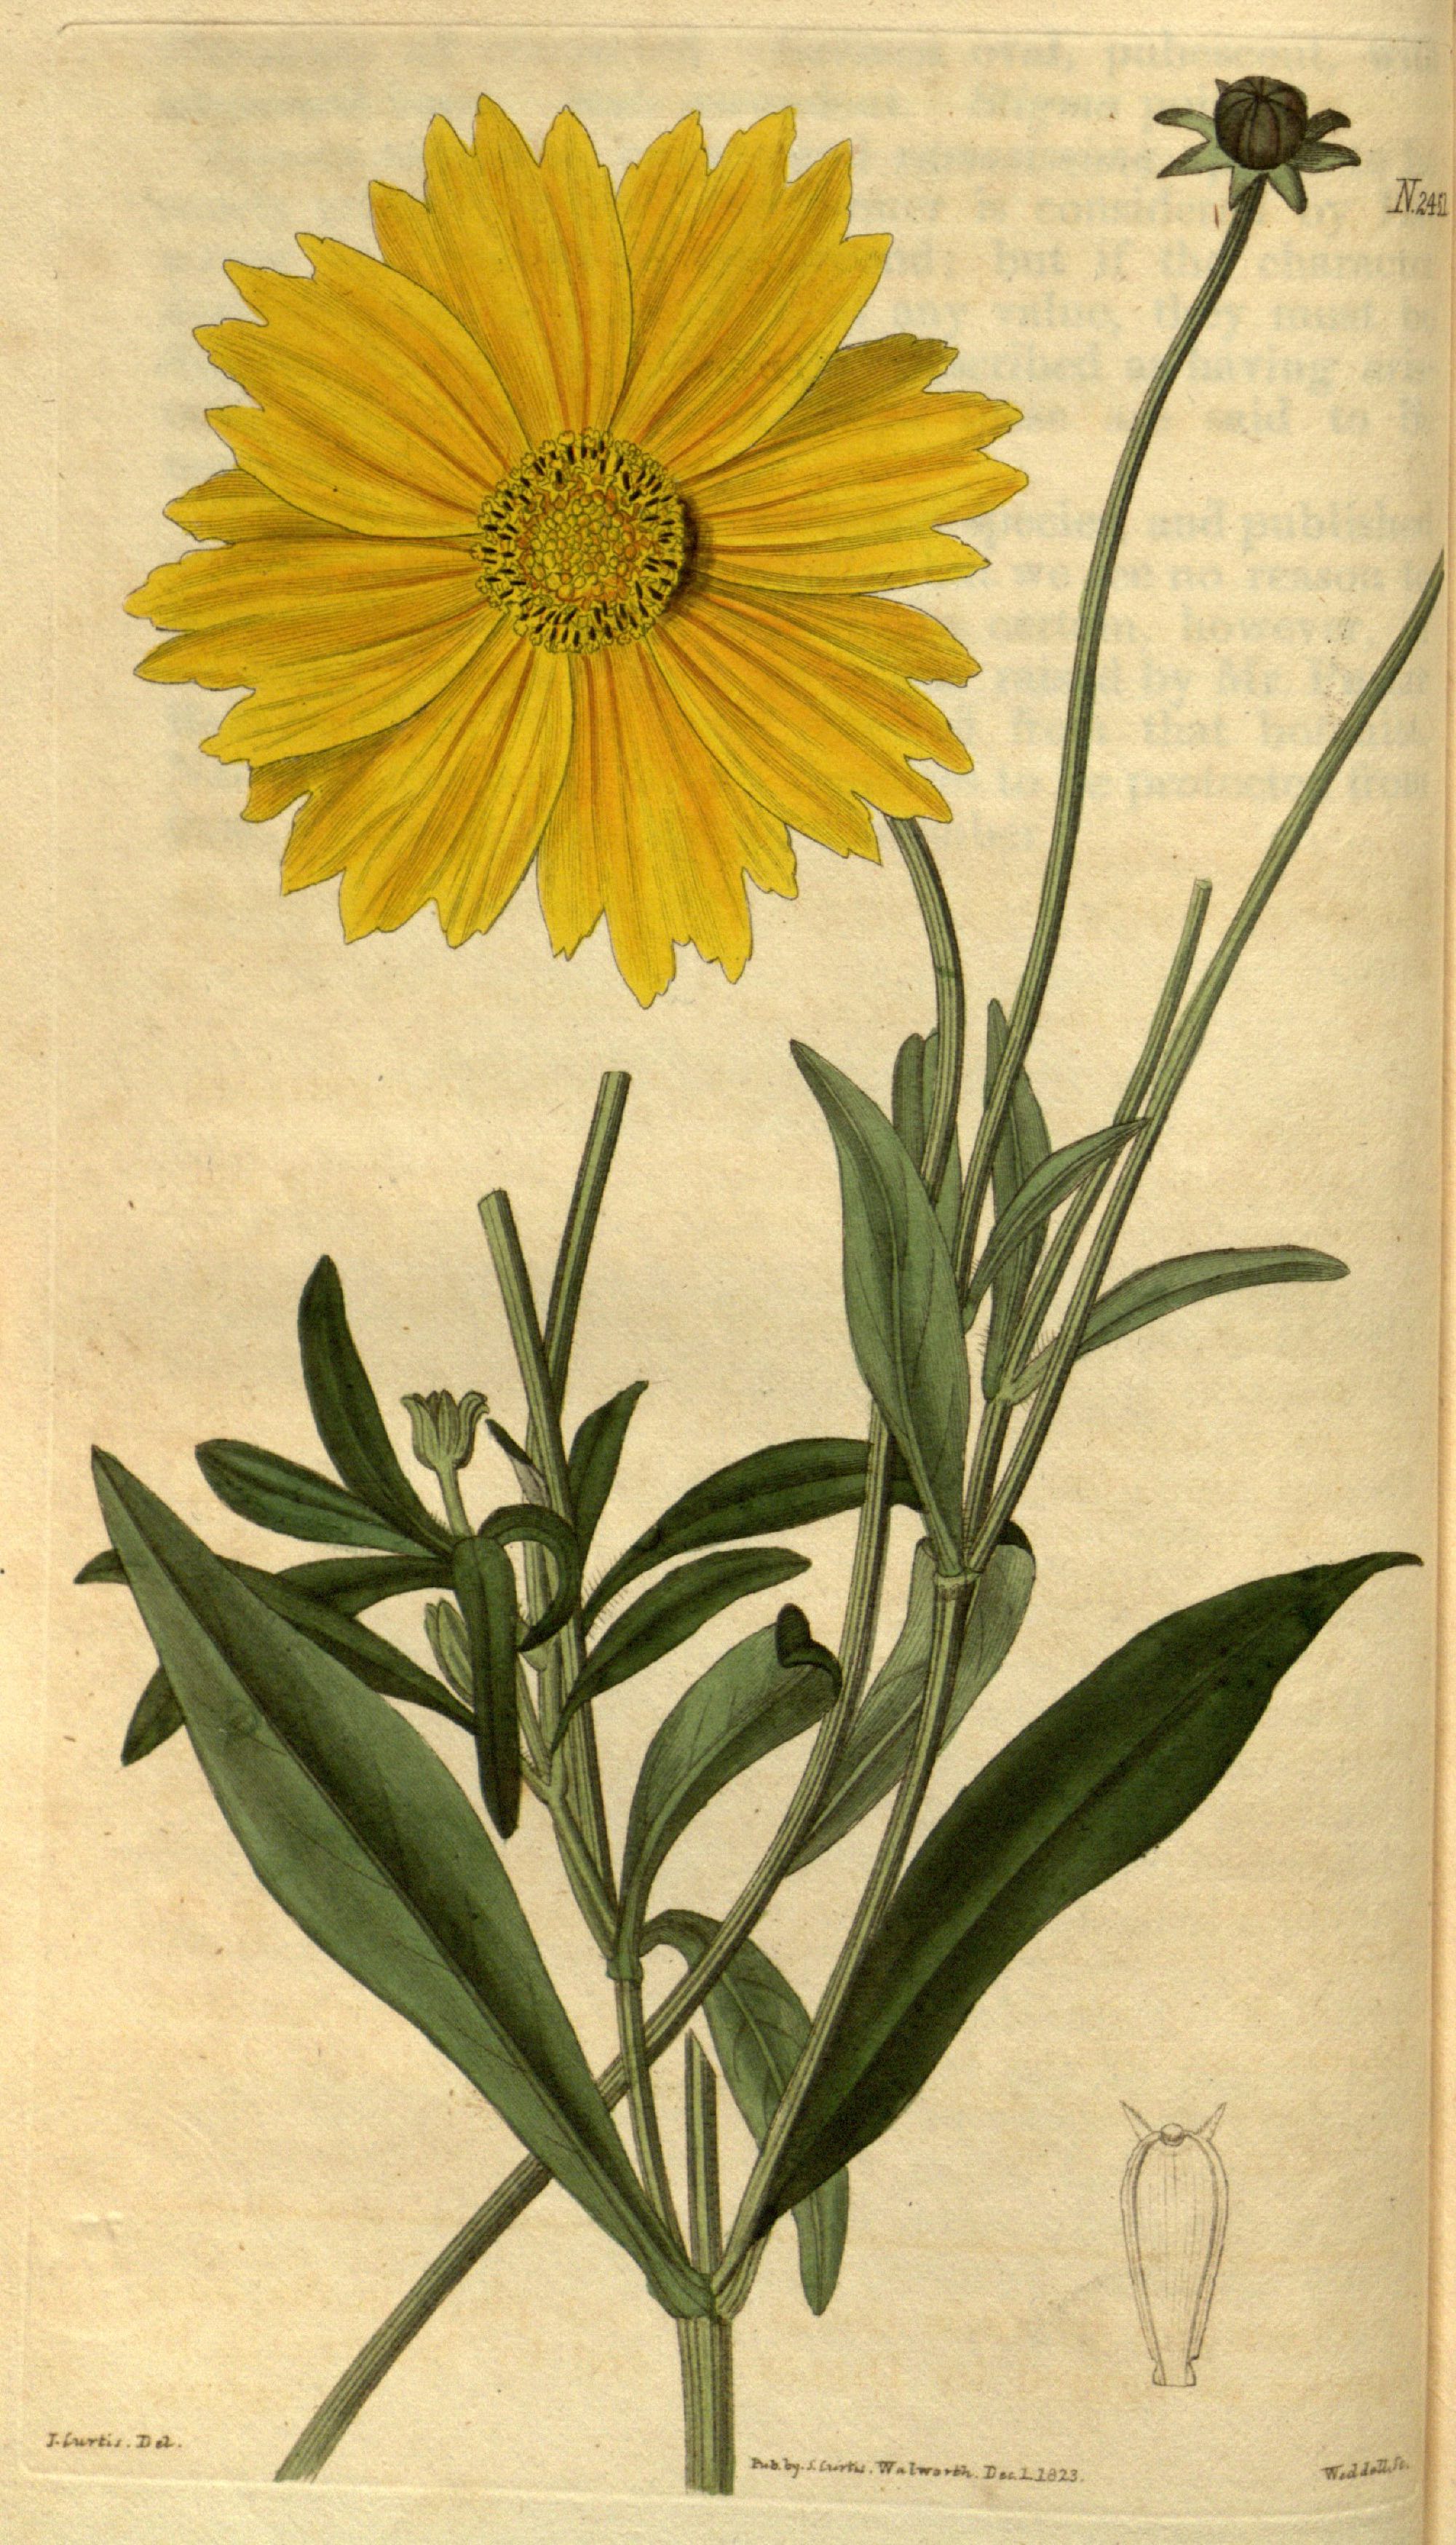 Lance-leaved coreopsis (Coreopsis lanceolata) illustration circa 1824.